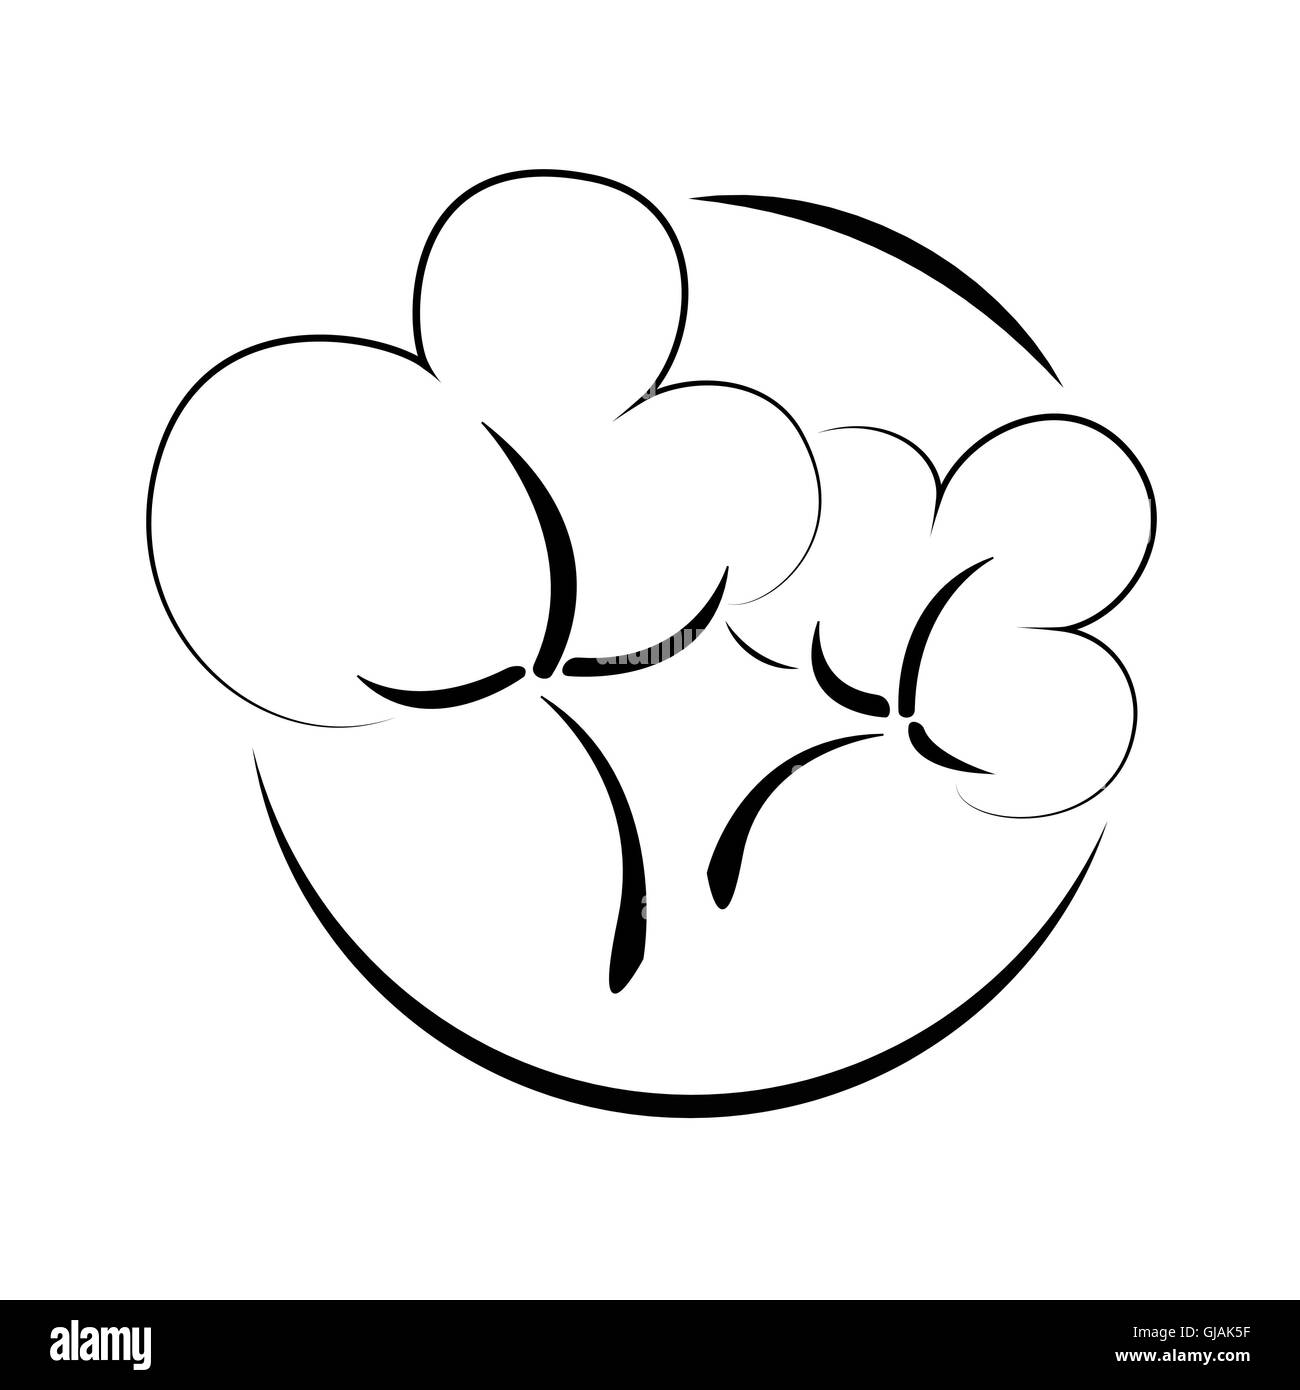 Cotton logo. Linear cotton symbol. Isolated illustration. Vector